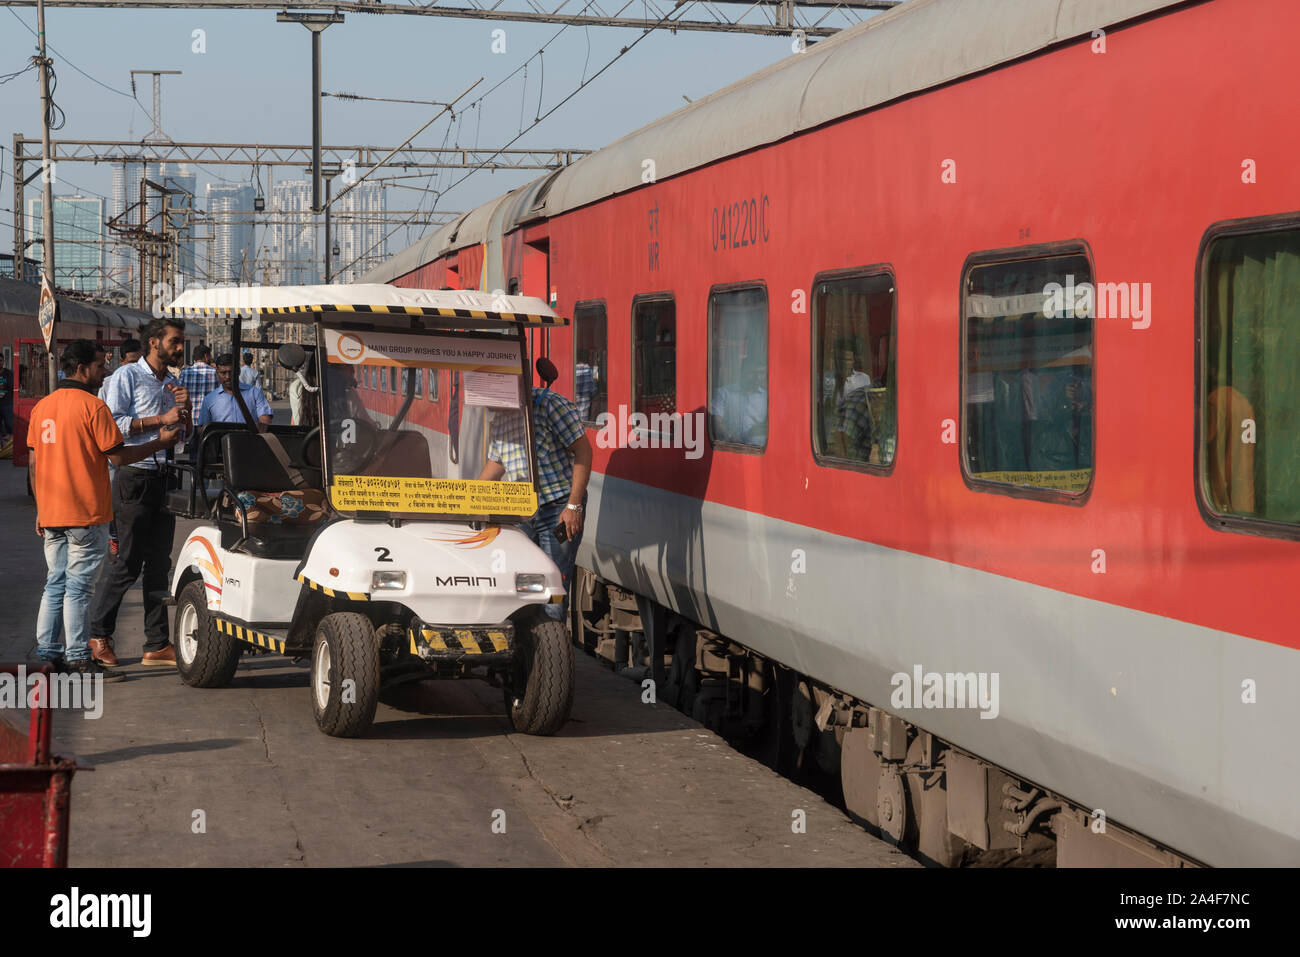 A passenger cart near the Mumbai Rajdhani express train at Mumbai central station in India. Stock Photo